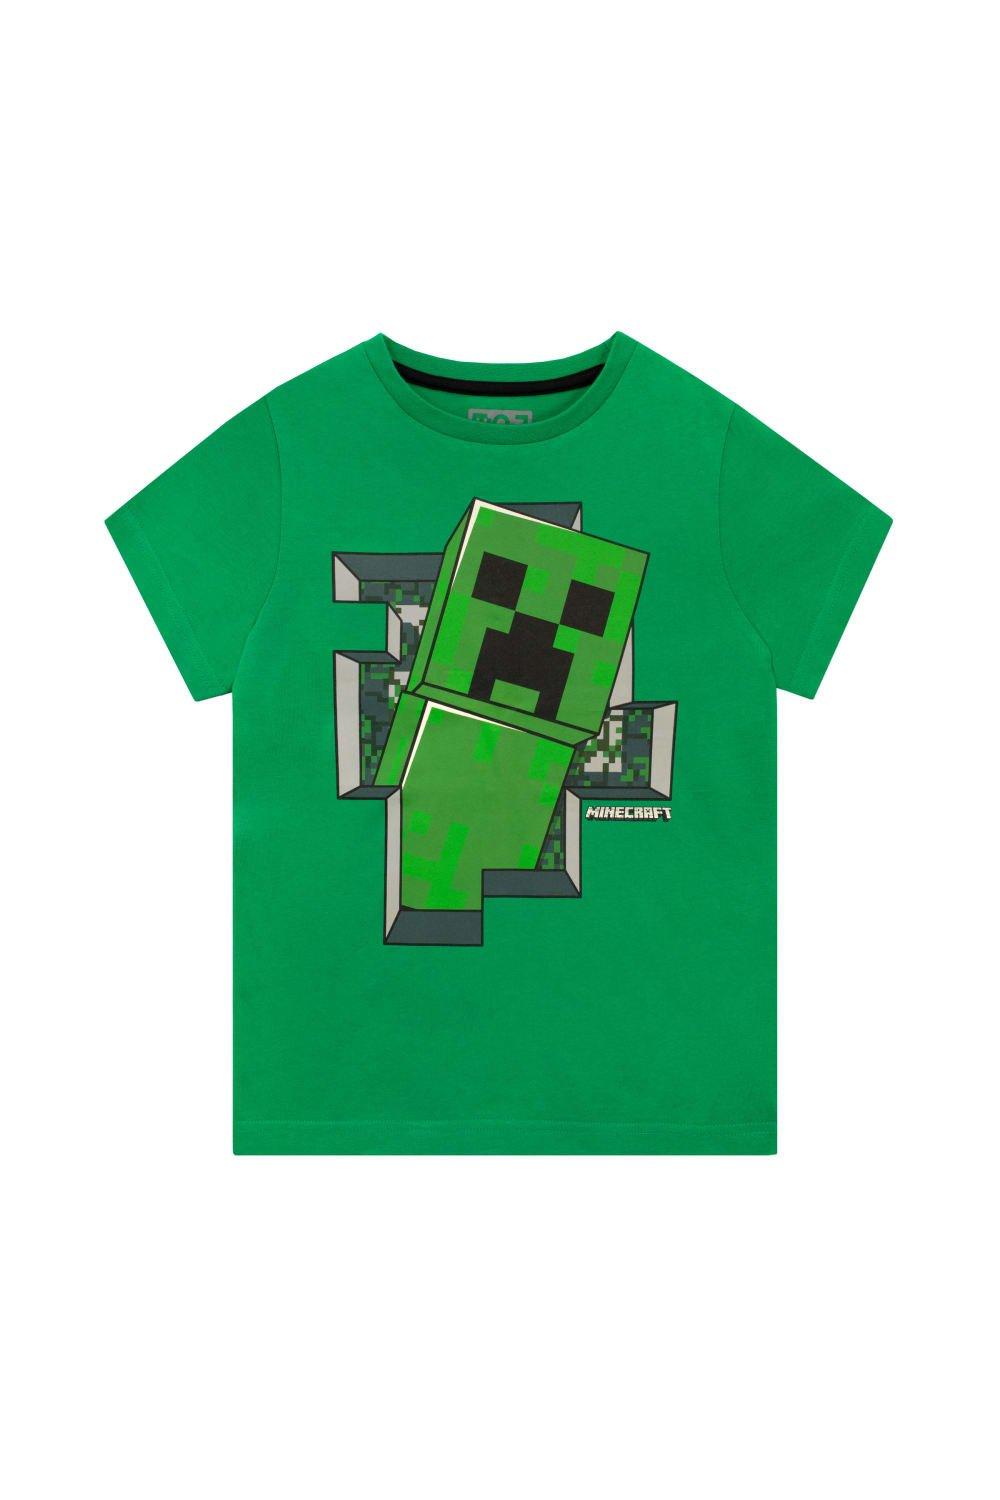 Футболка с рисунком Creeper Minecraft, зеленый футболка minecraft – creeper серая